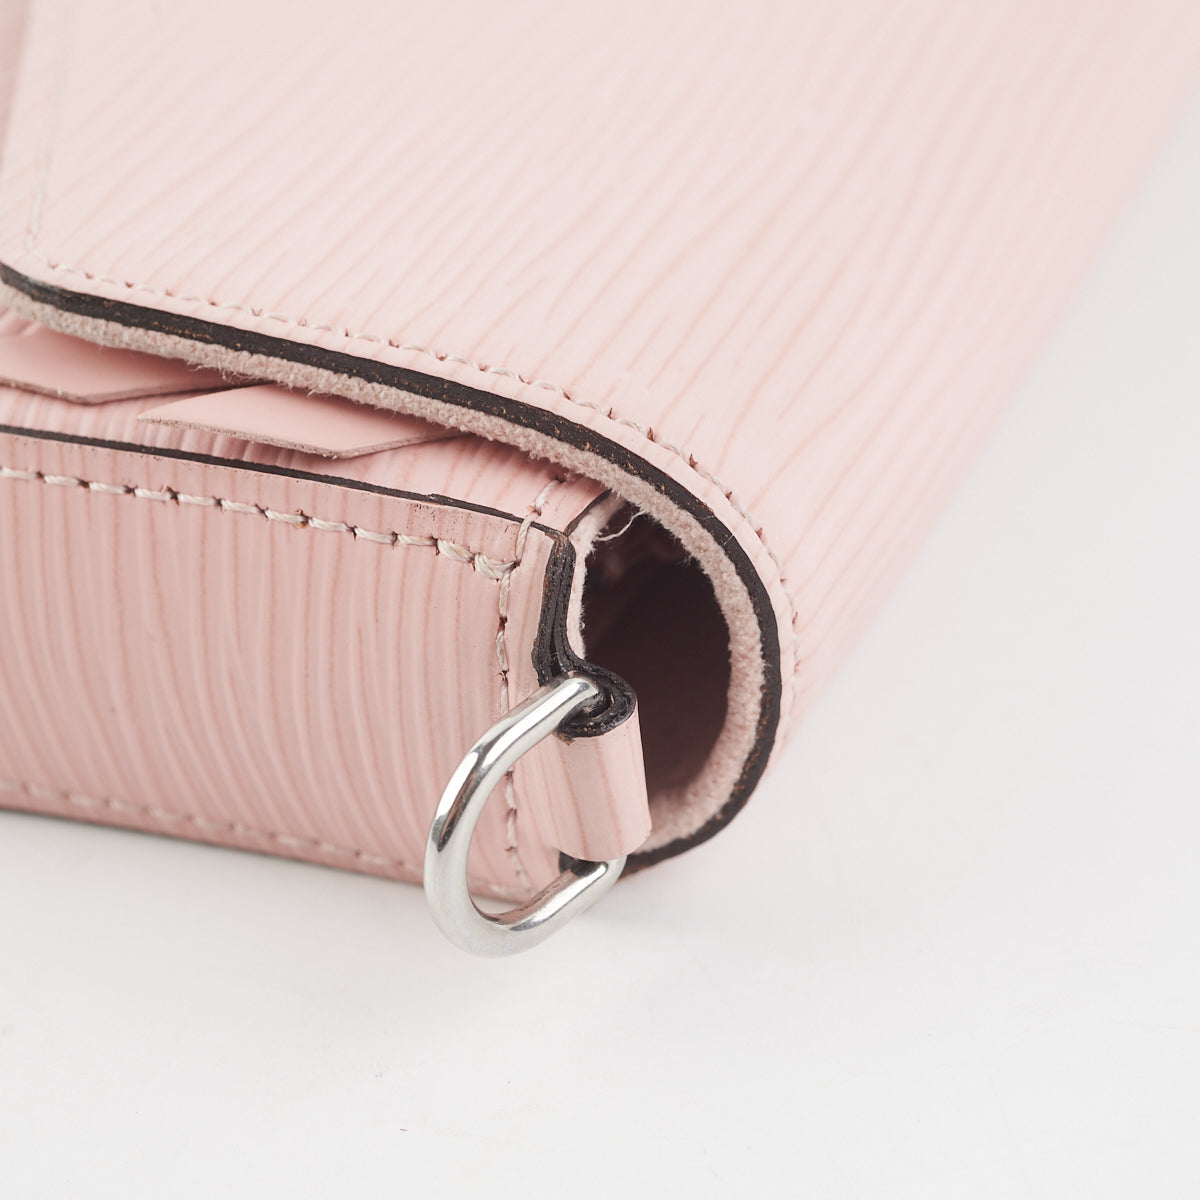 Lushentic Rep Félicie Pochette M67856 Chain Bag Rose Poudré Pink